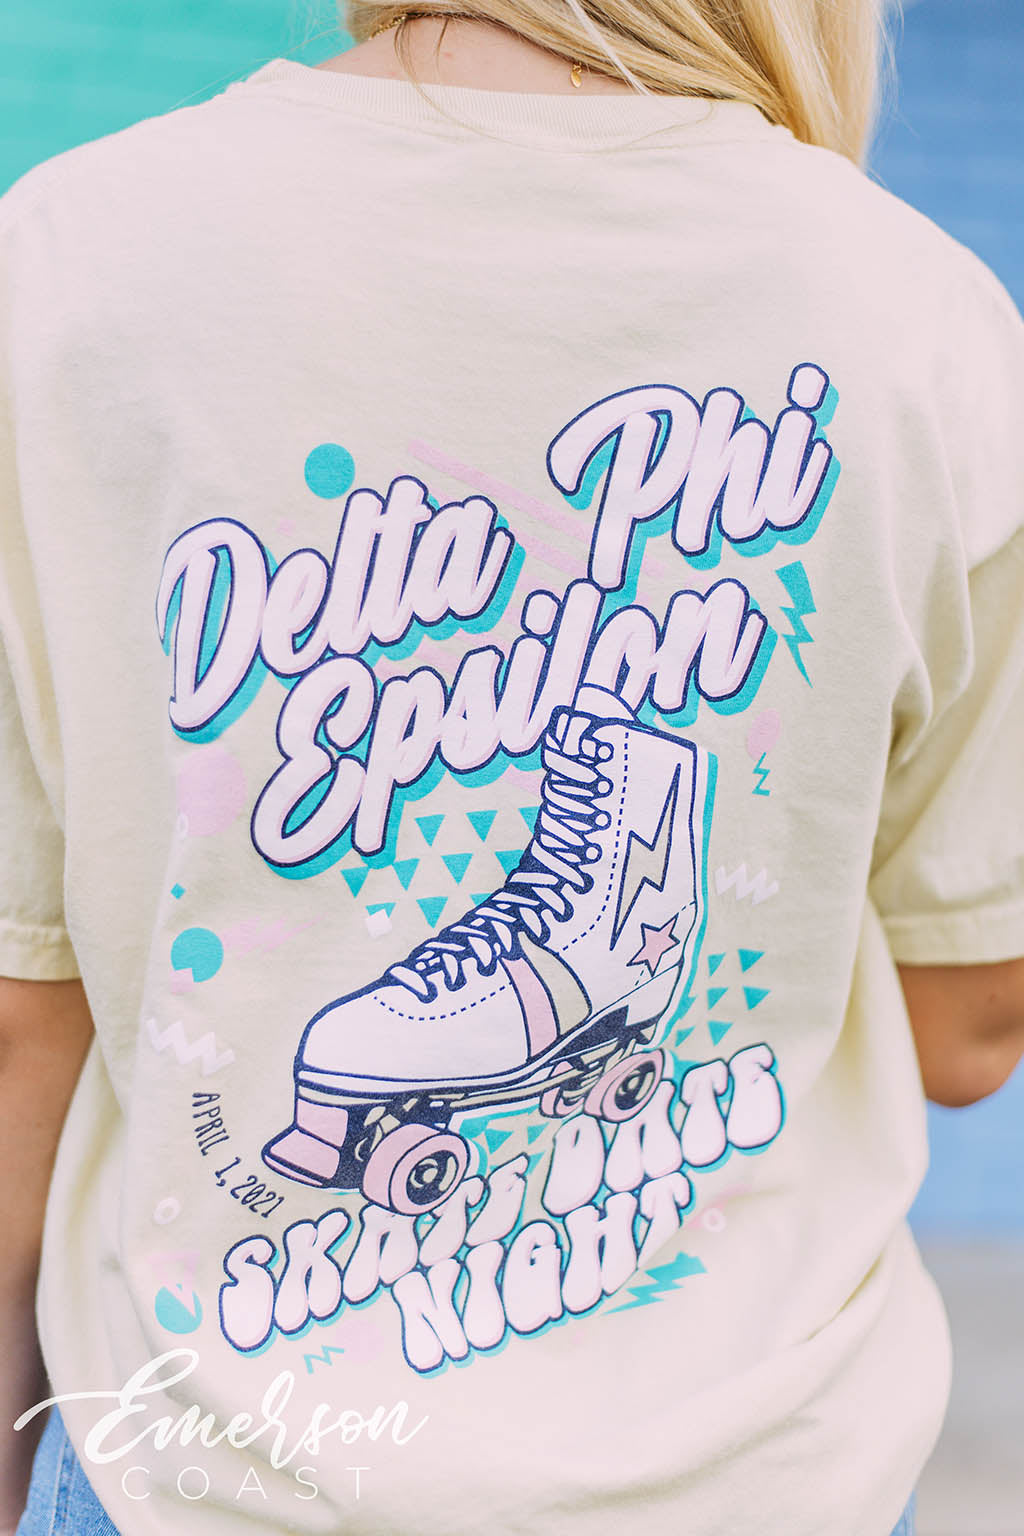 Delta Phi Epsilon Skate Date Night Tee